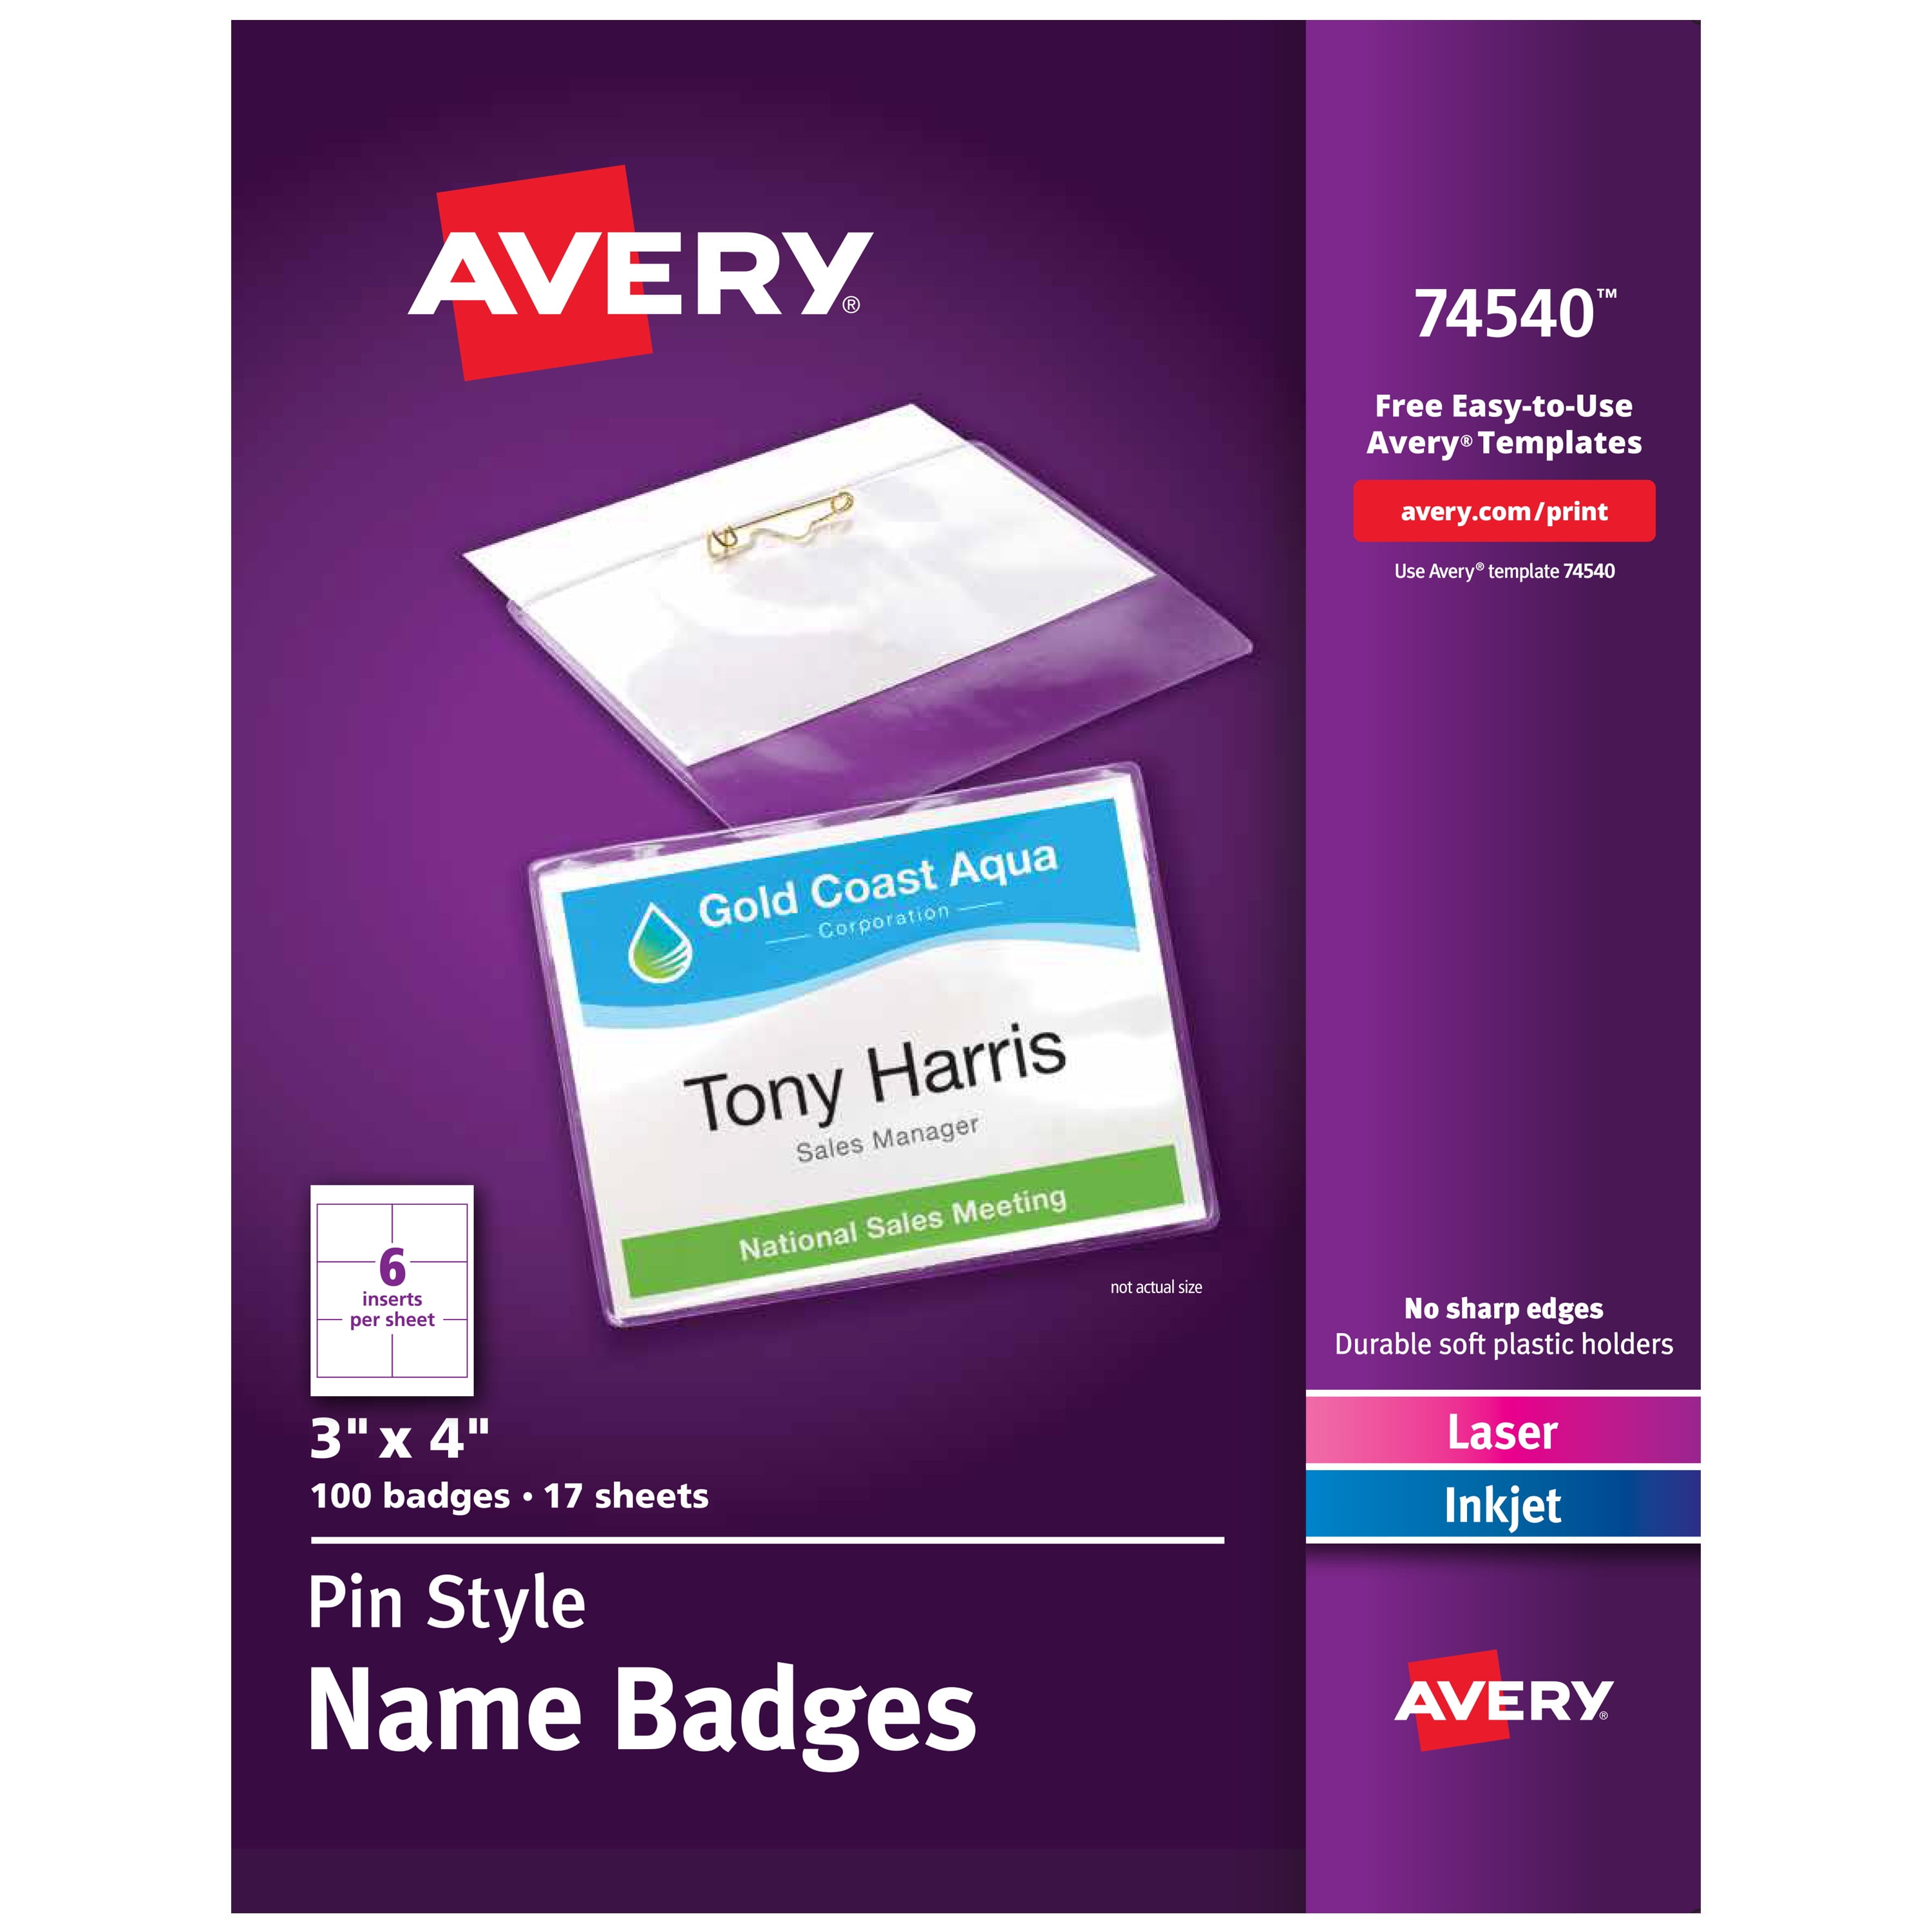 Avery Dennison AVE74459 Badge Label for sale online 